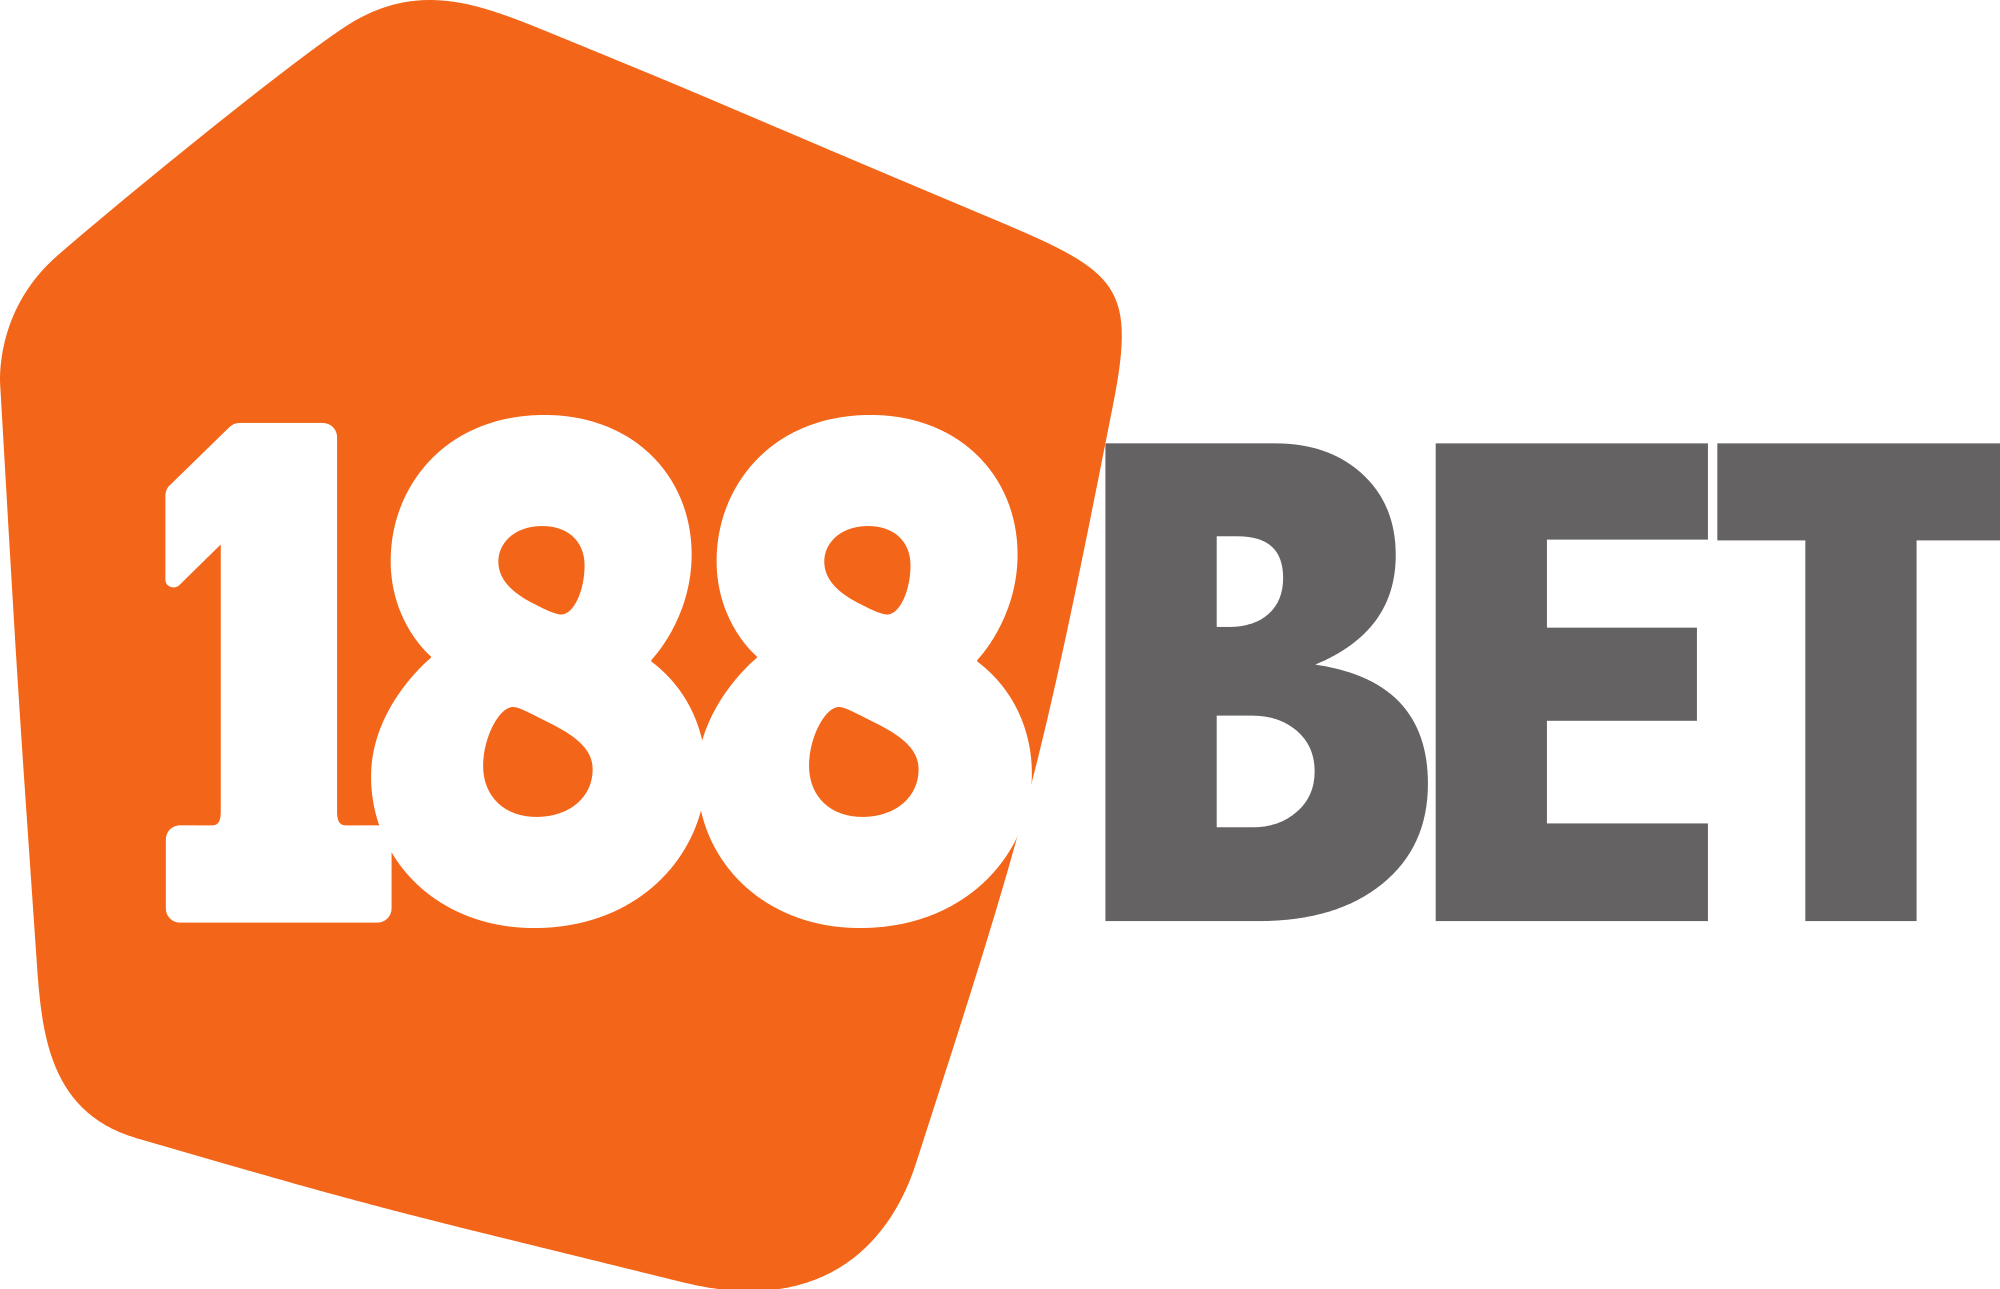 188BET logo - Odds-mafia